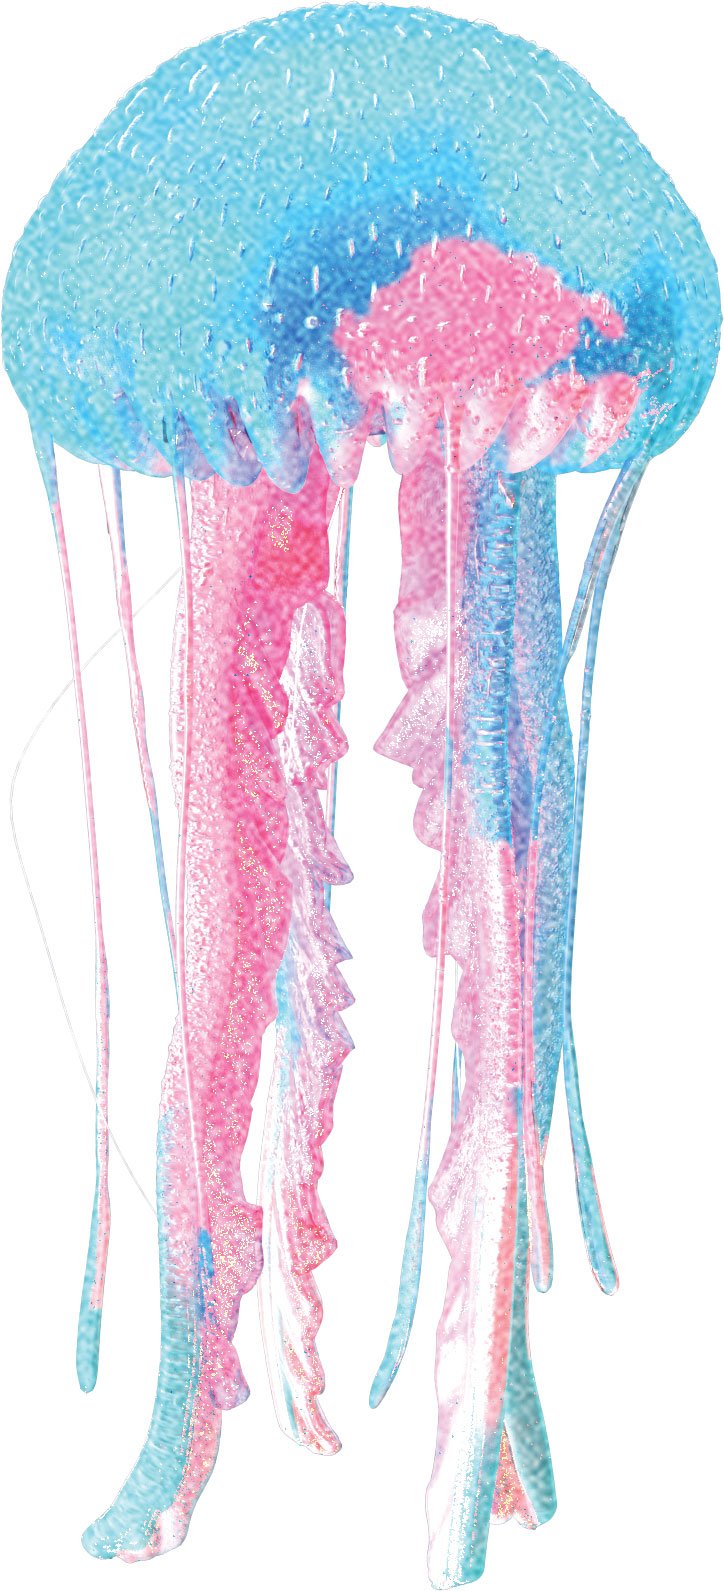 Jellyfish3.jpg